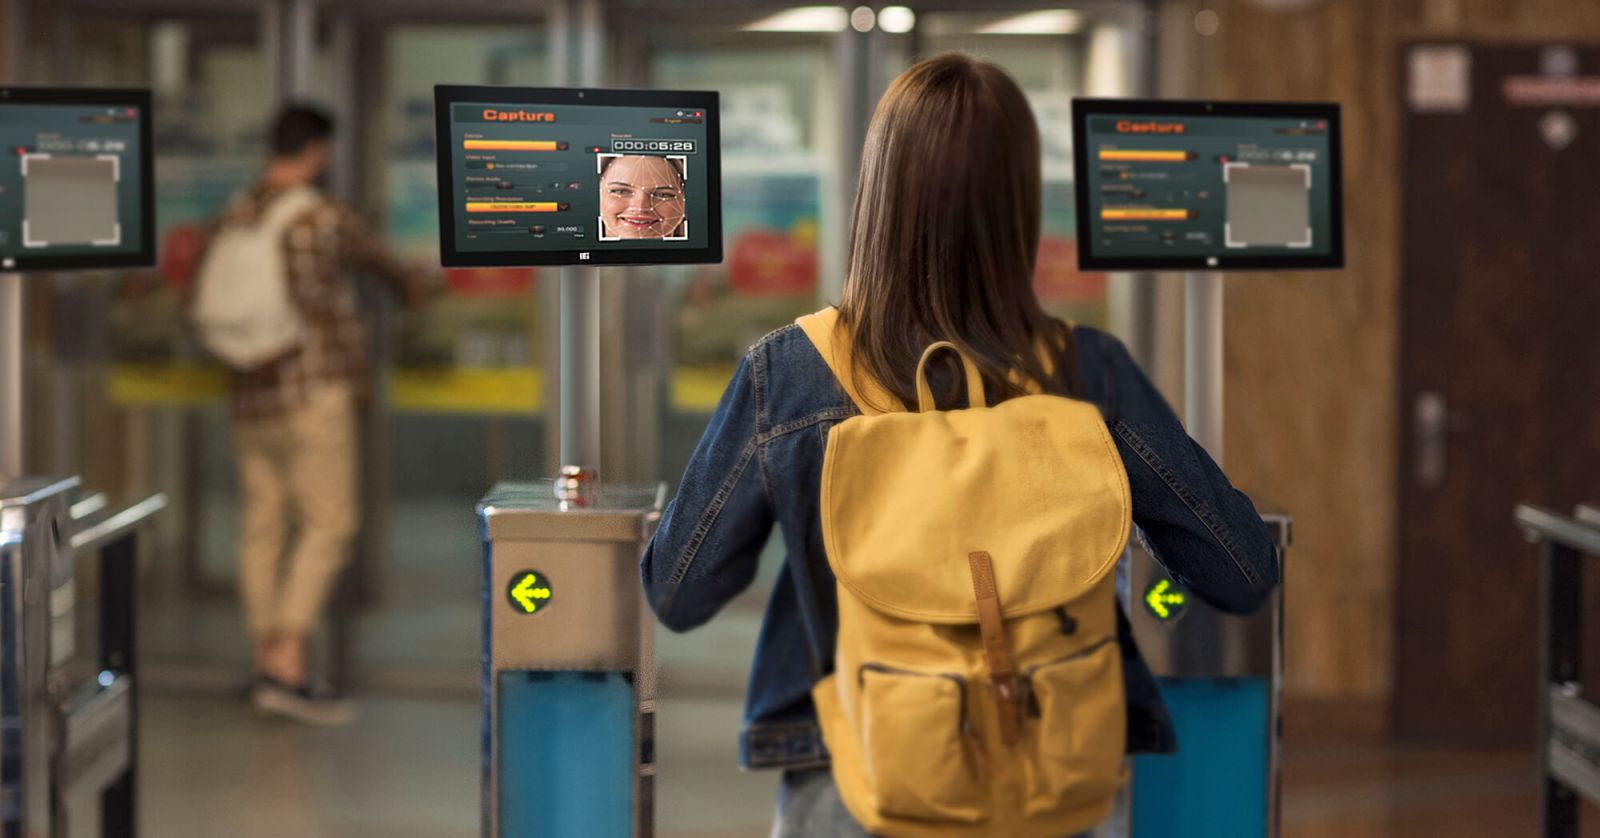 Access Gate Control Computer | IoT case study - facial recognition